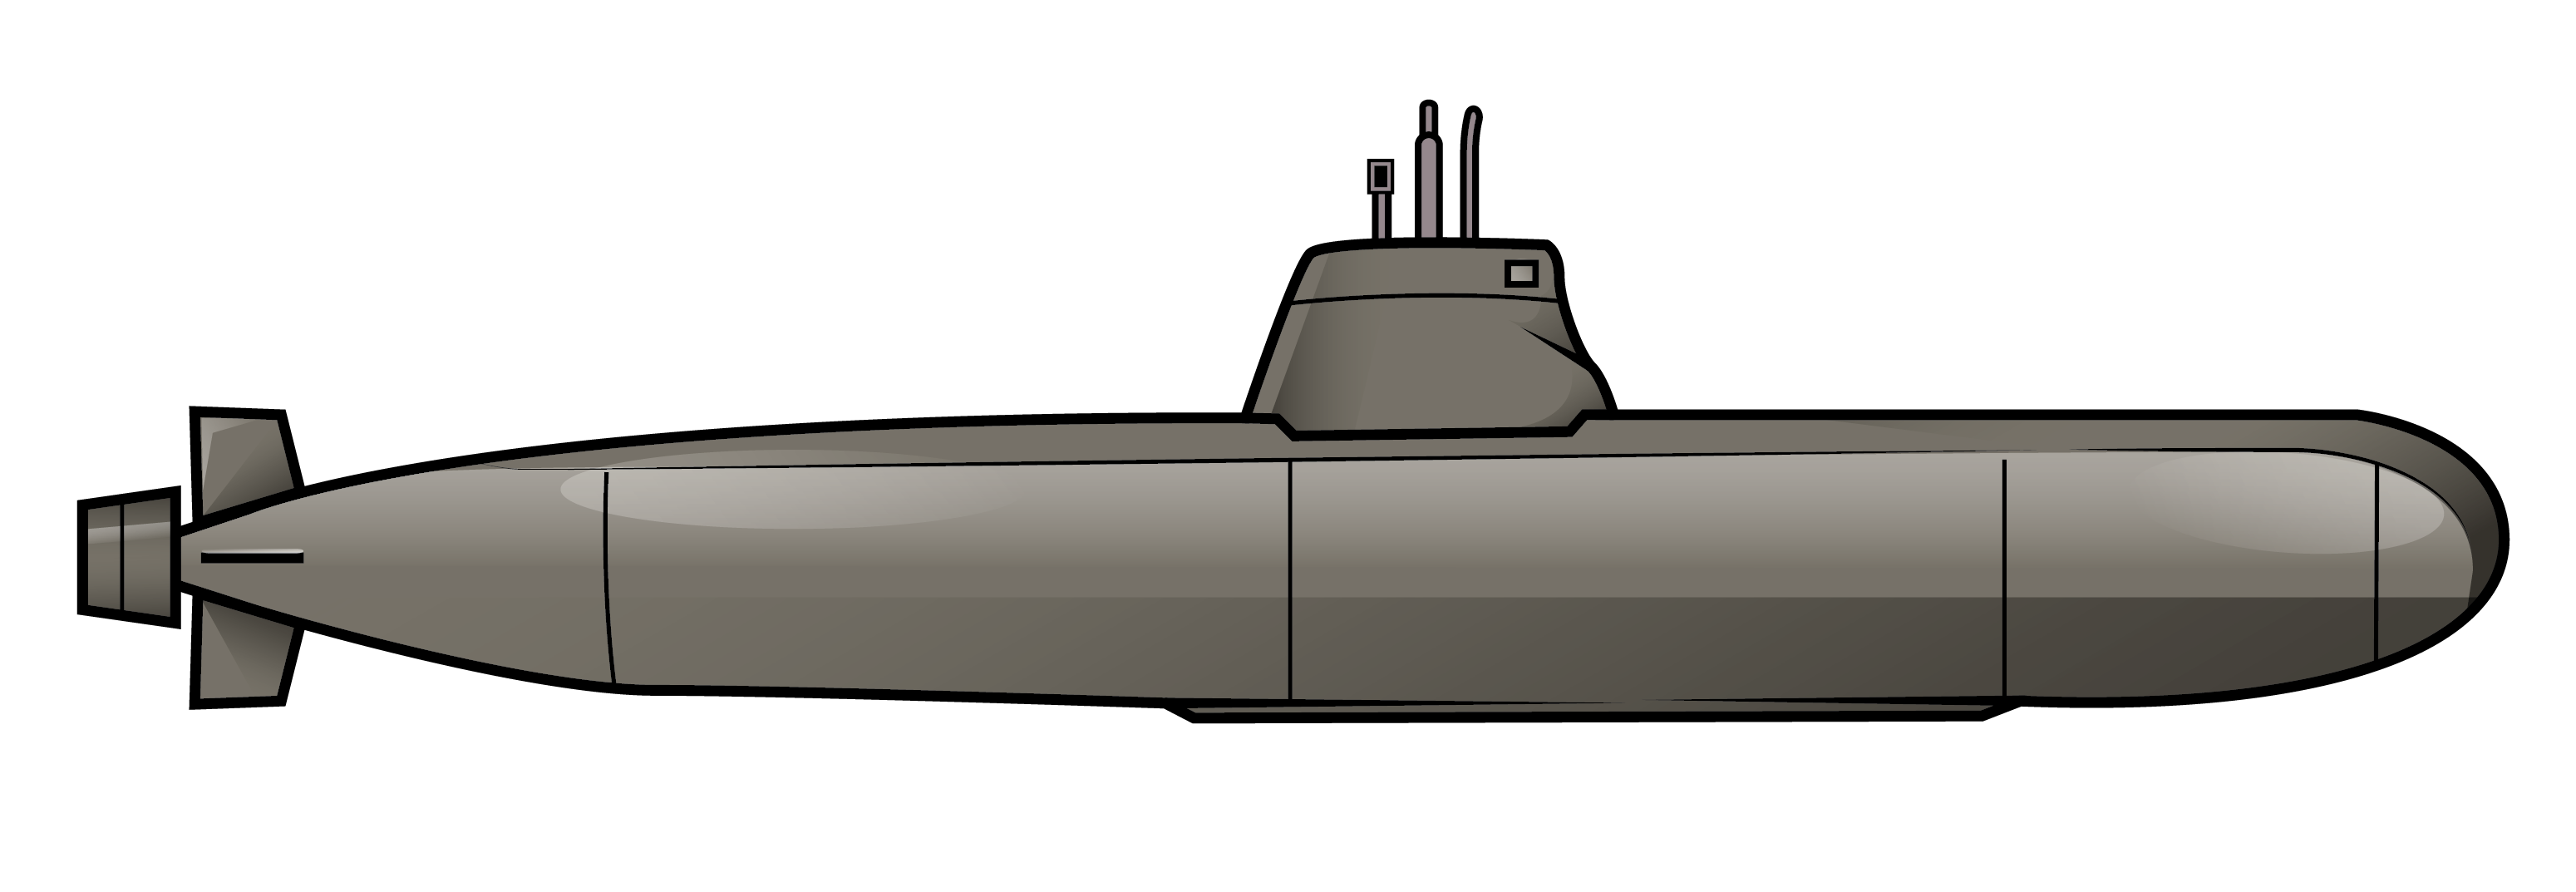 Submarine clipart submarine periscope, Submarine submarine